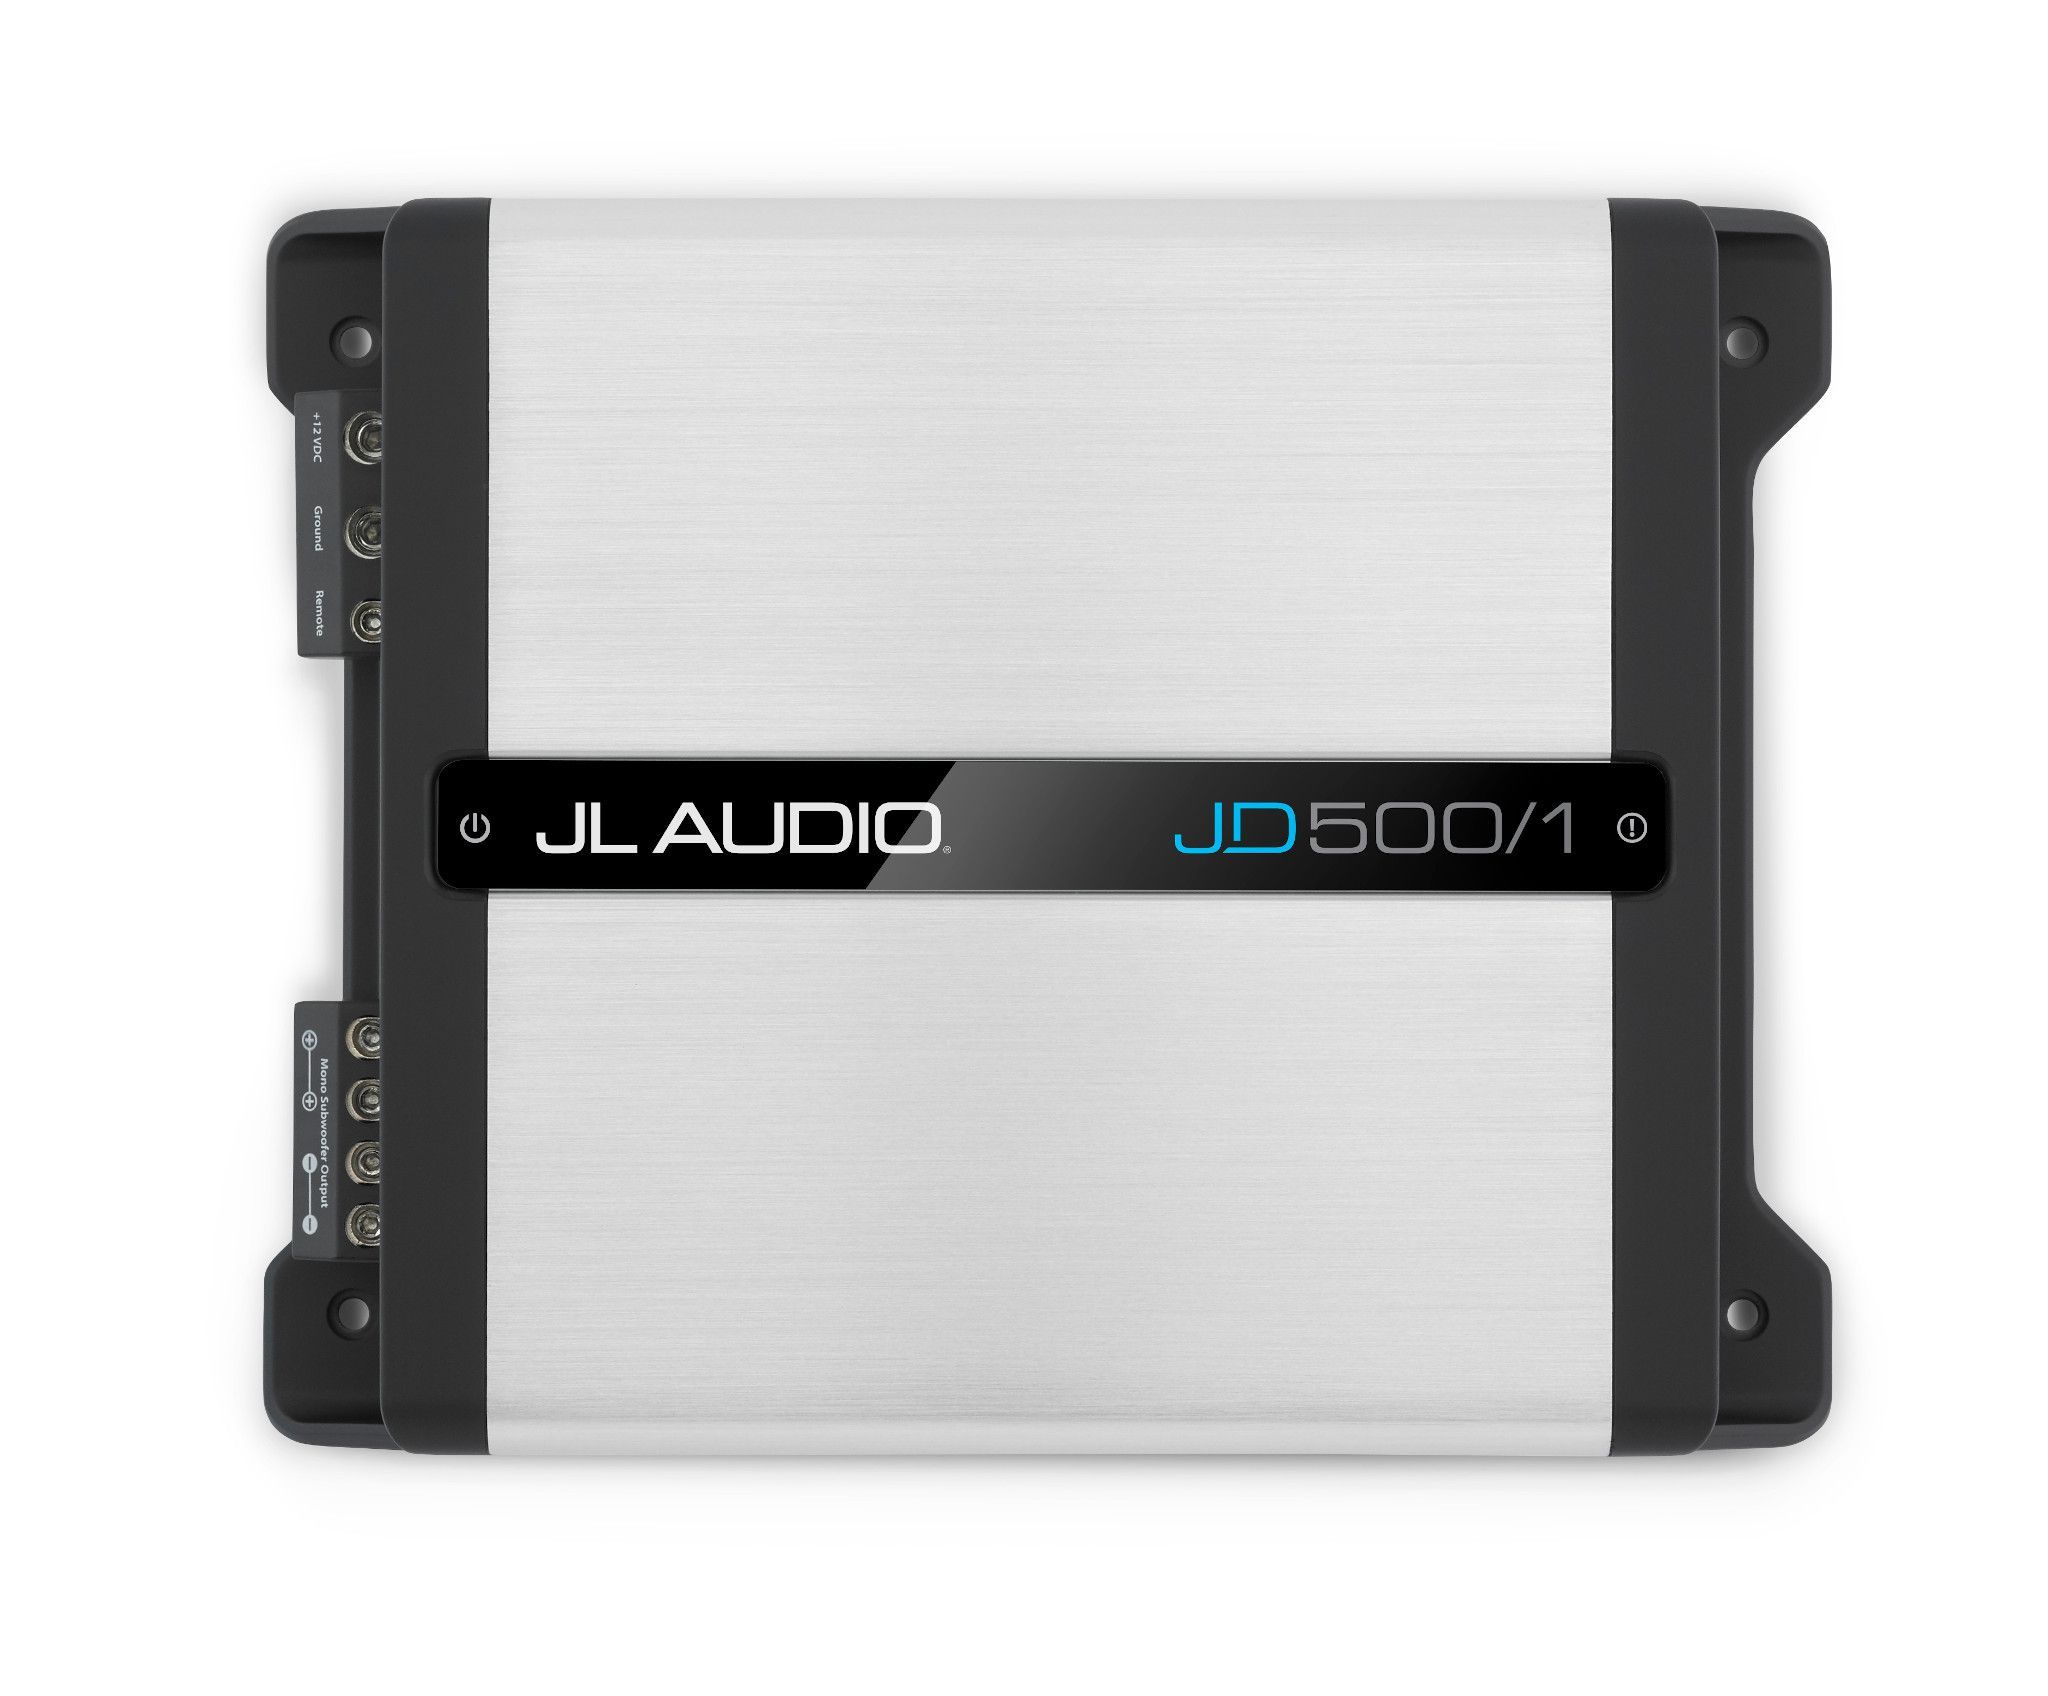 JL Audio JL Audio JD500/1D